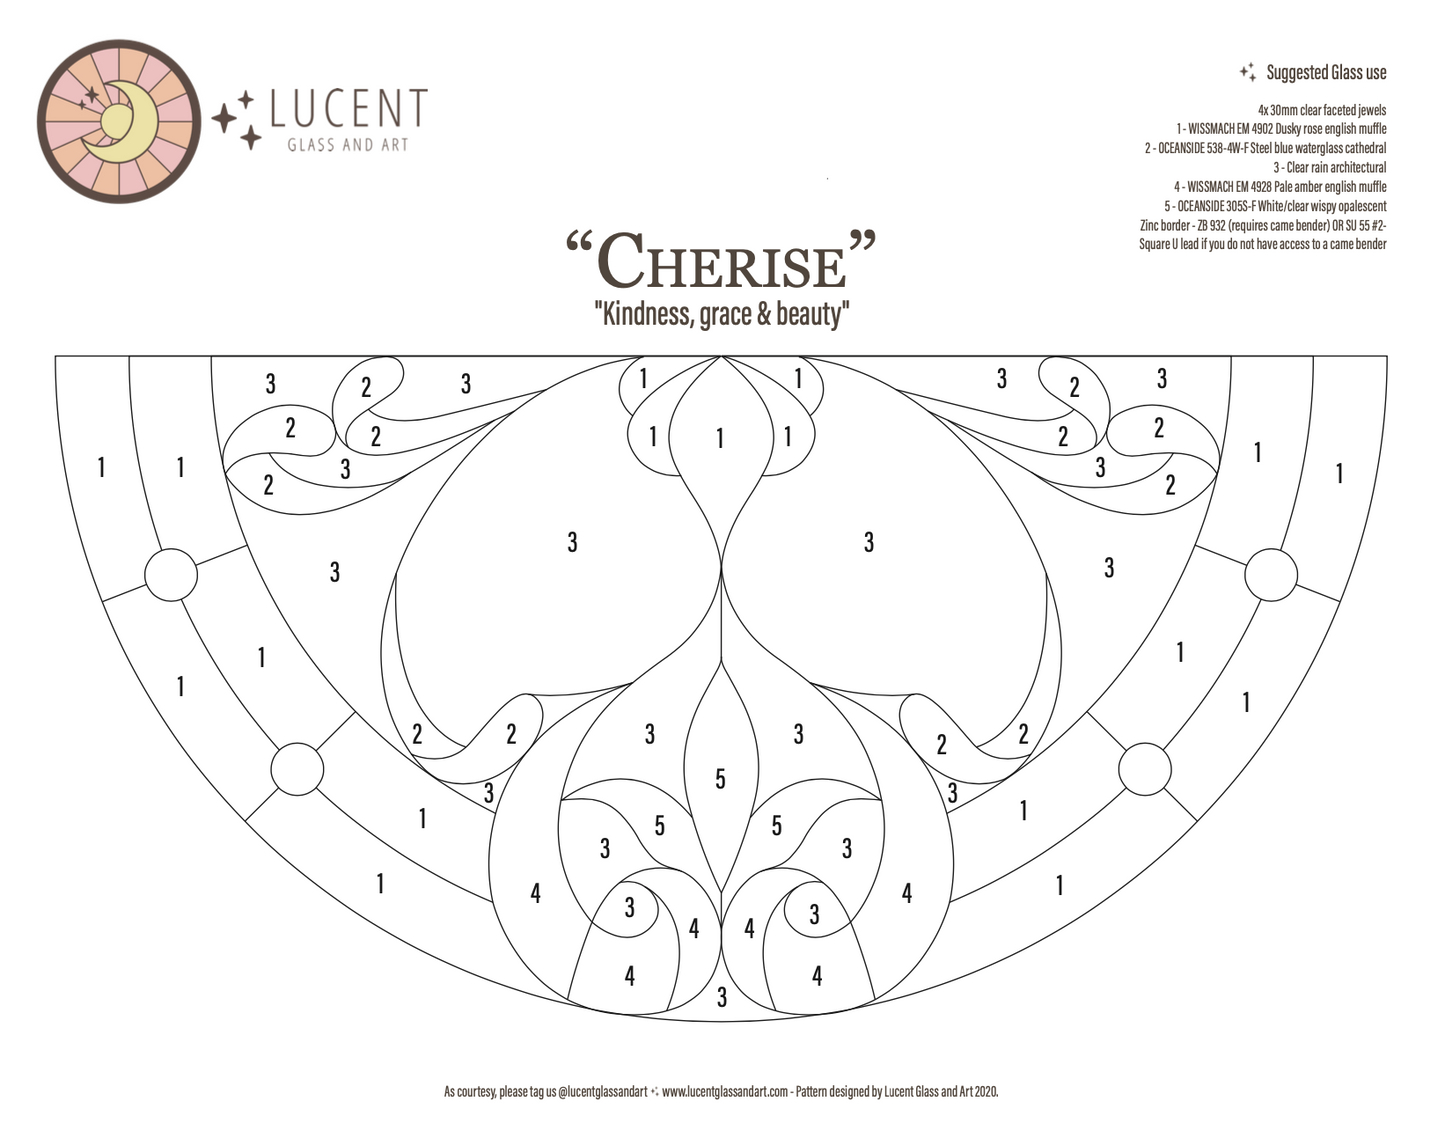 "Cherise" PDF stained glass pattern